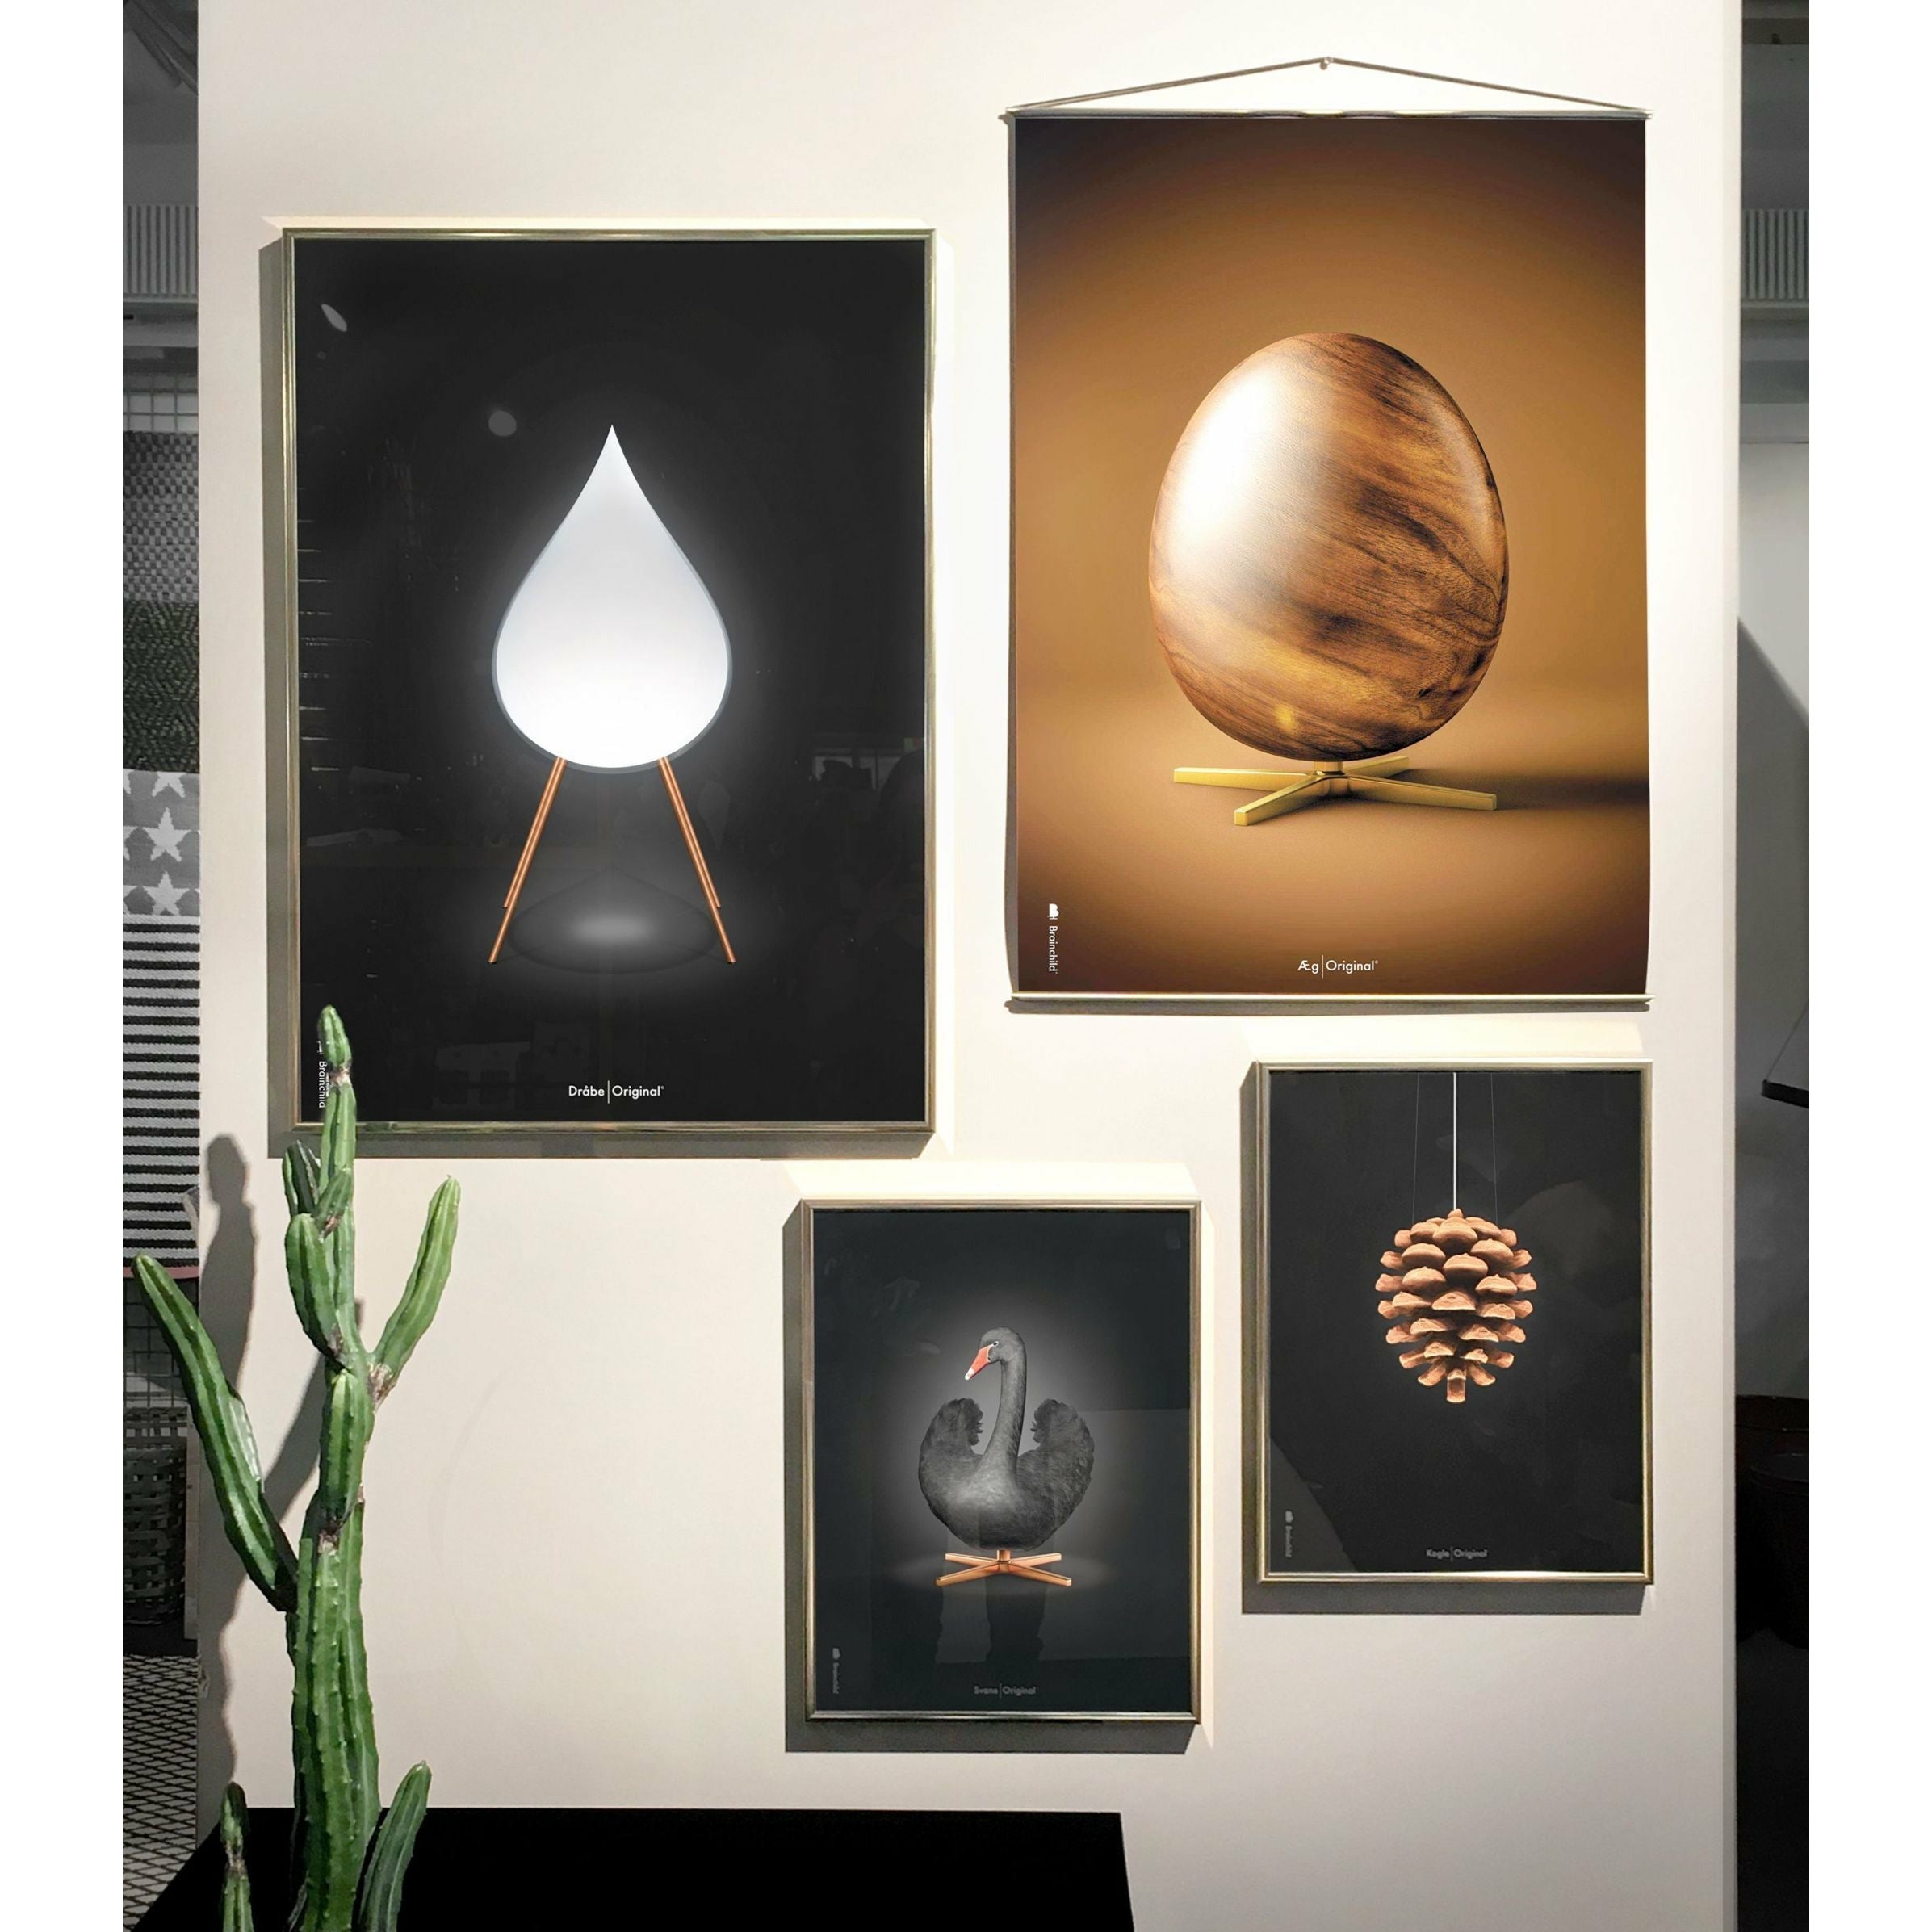 Brainchild Pine Cone Classic Poster, Frame Made Of Dark Wood 50x70 Cm, Black Background